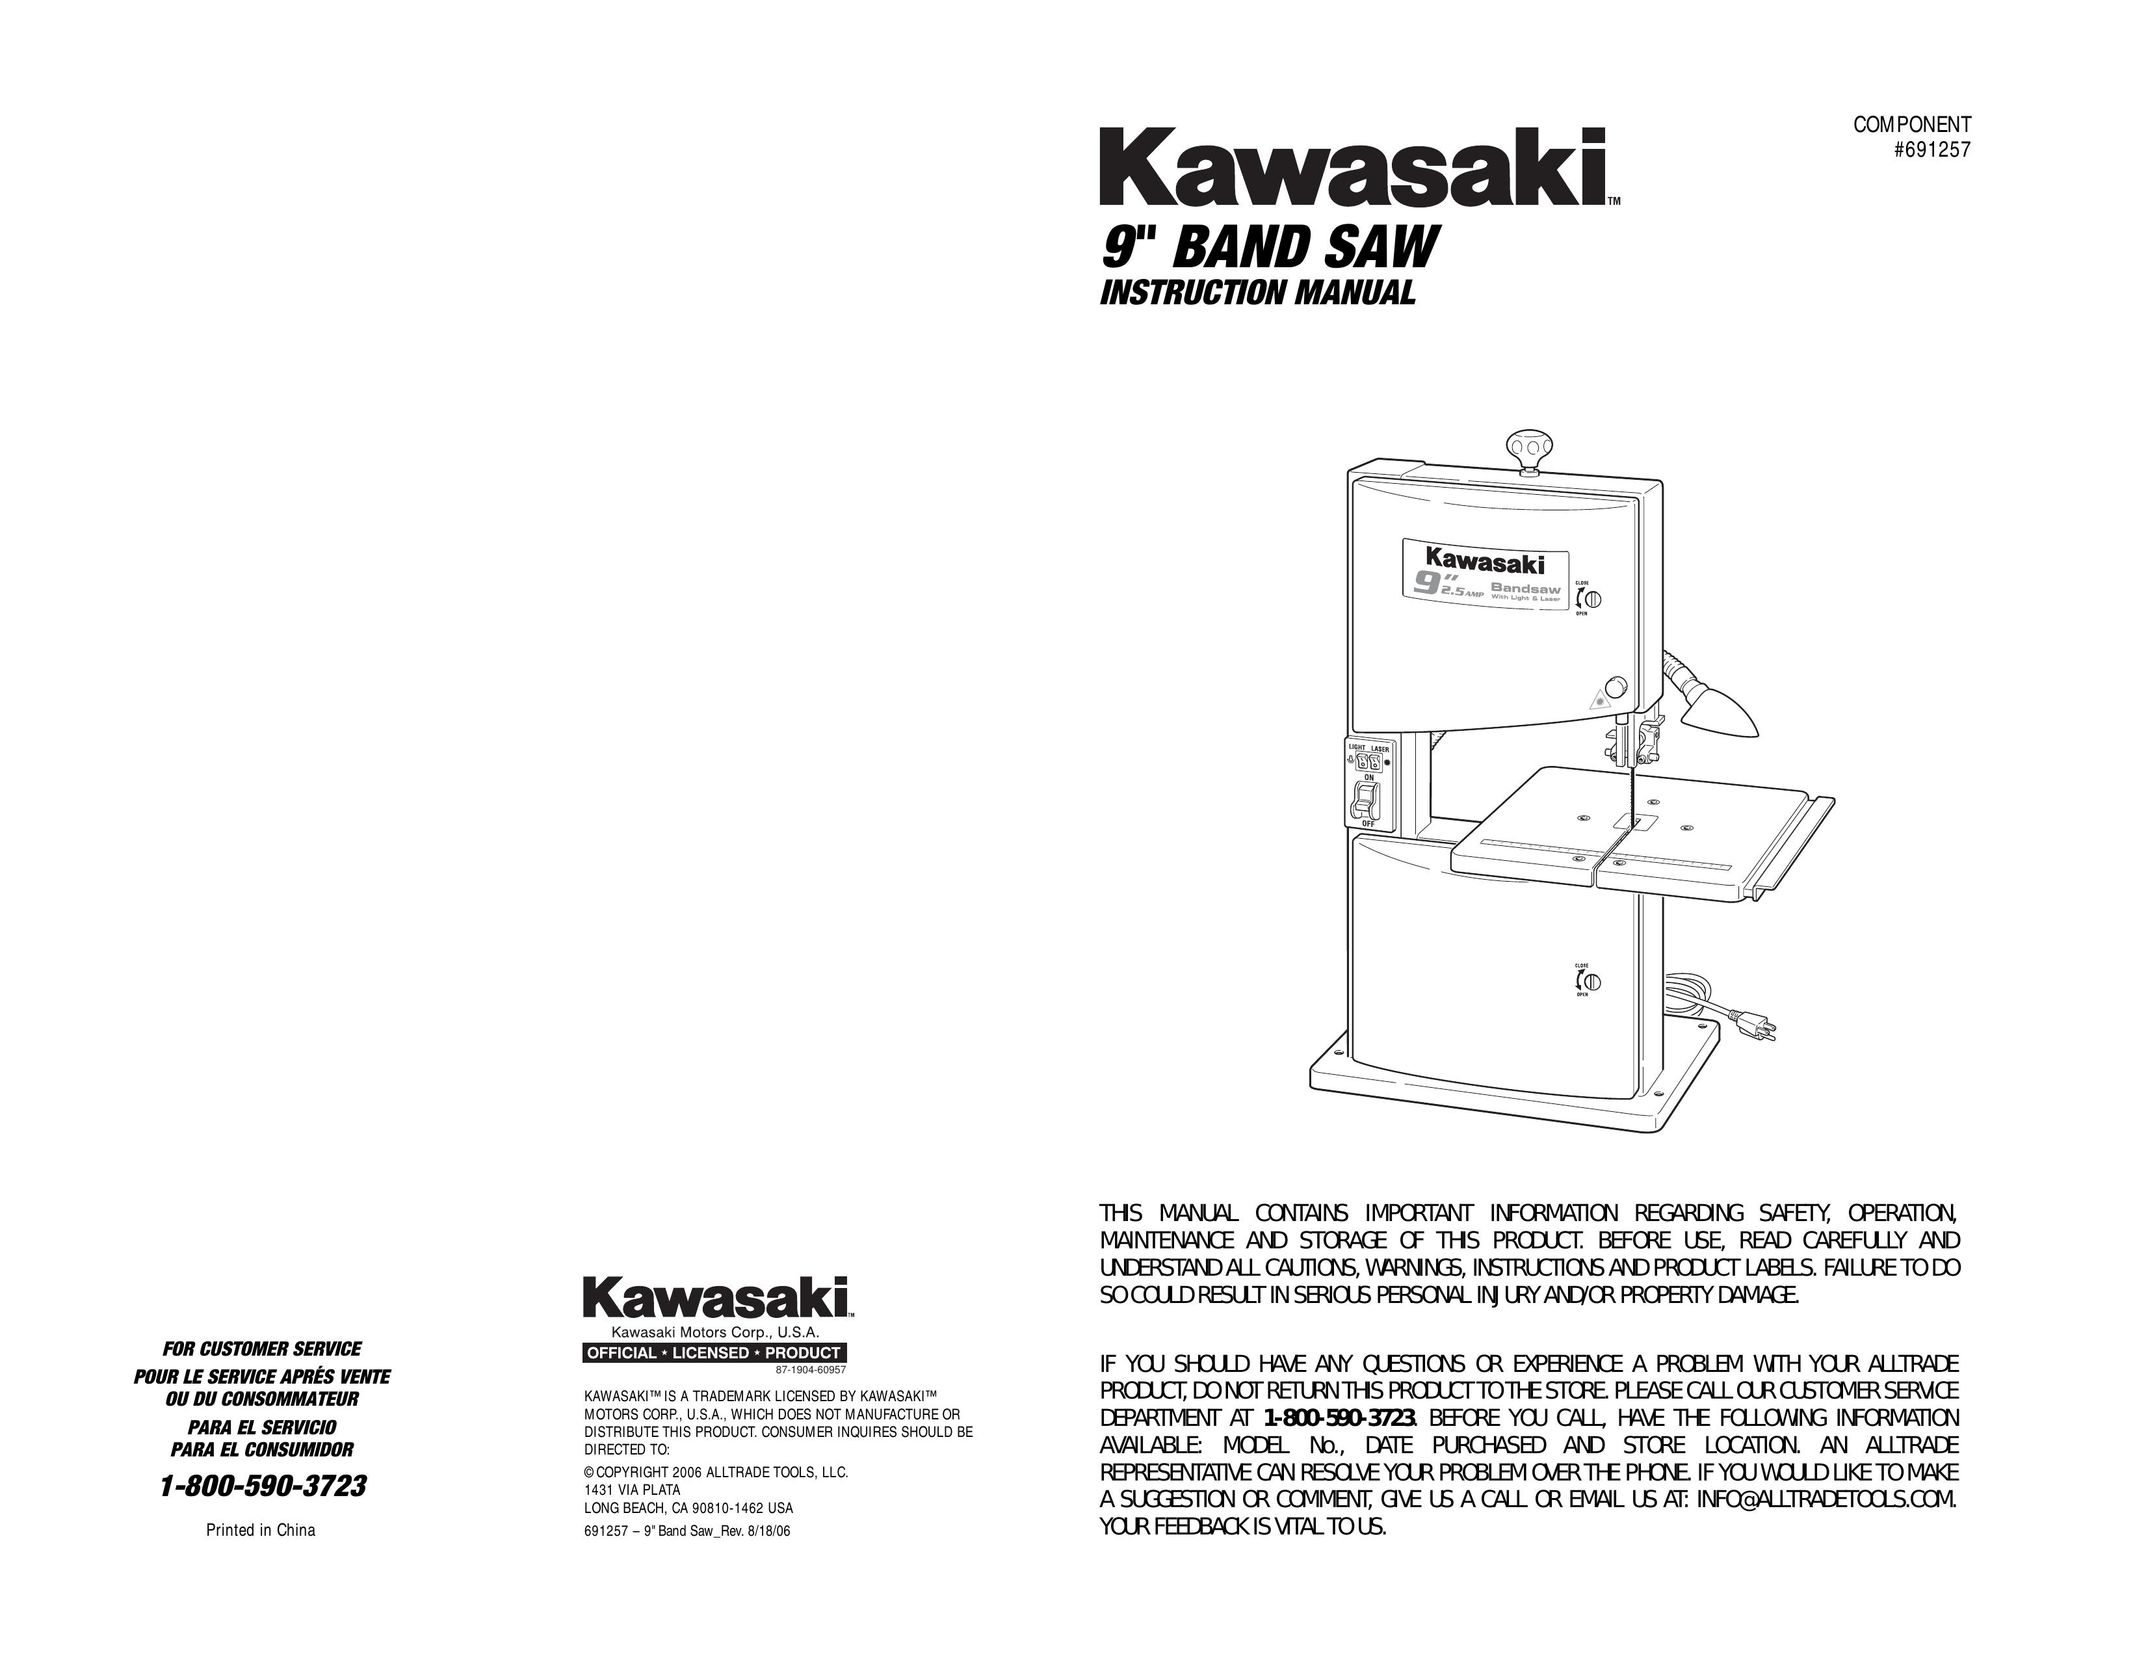 Kawasaki Band Saw Saw User Manual